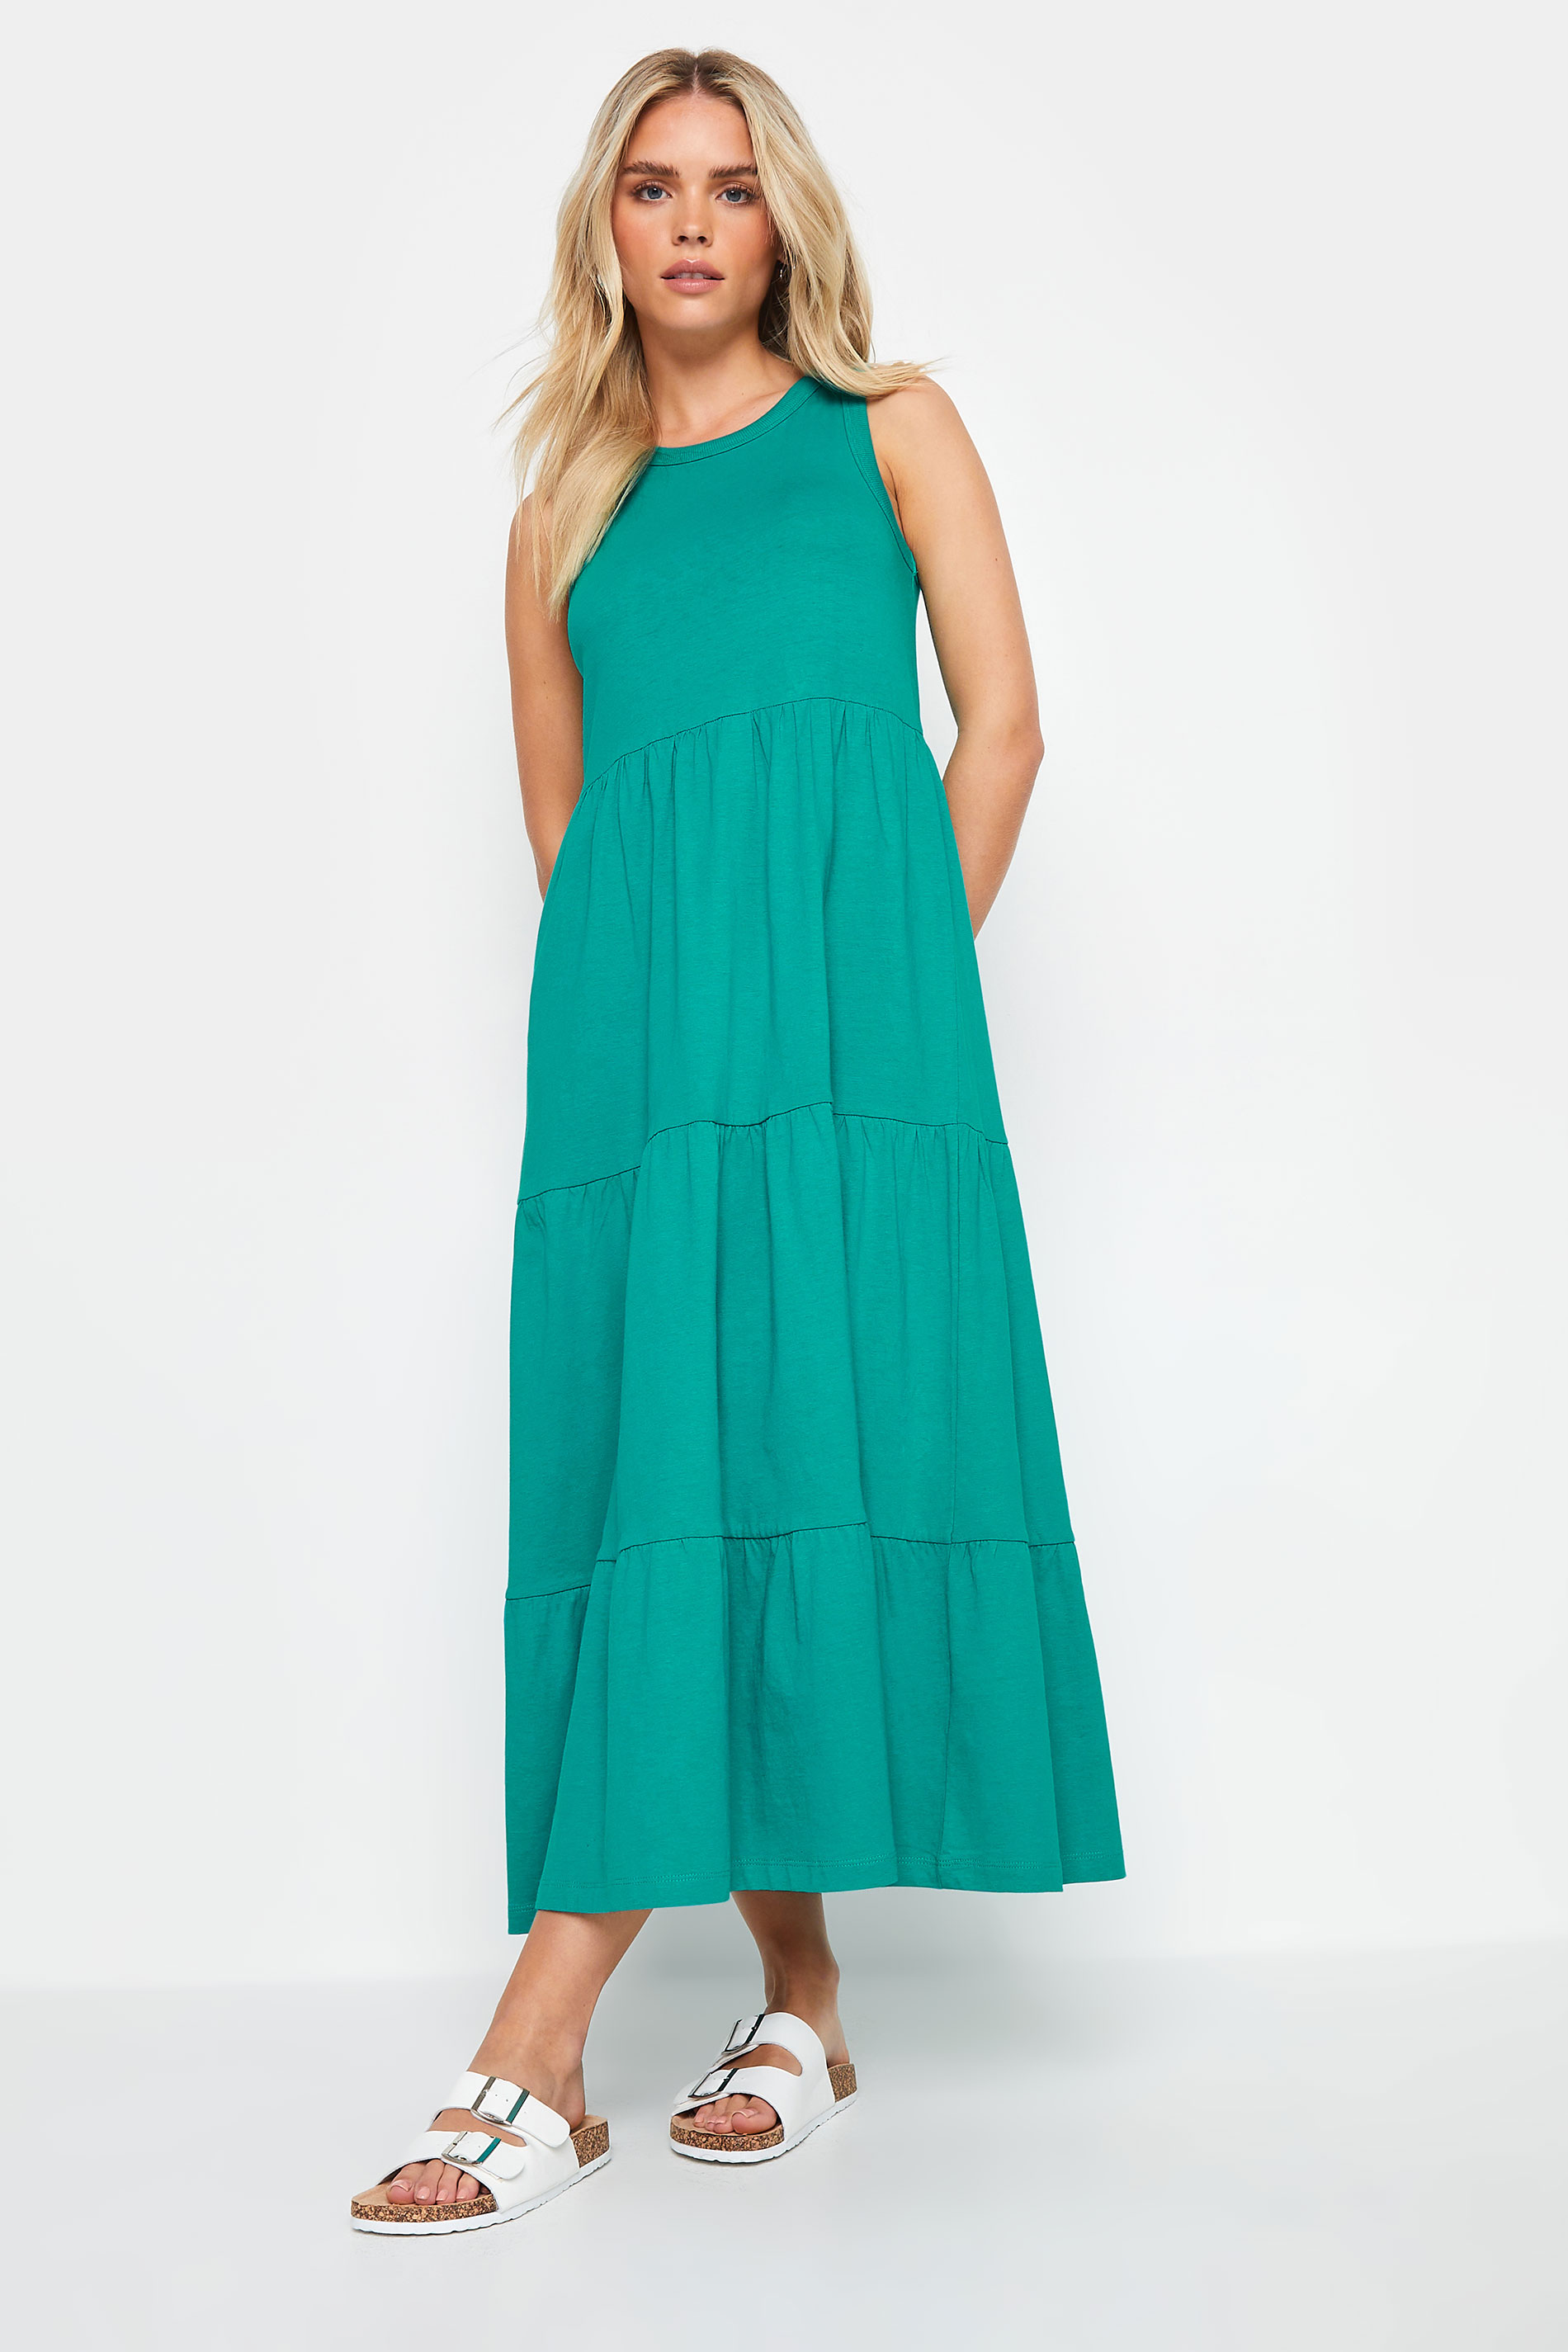 M&Co Petite Green Sleeveless Tiered Dress | M&Co 2